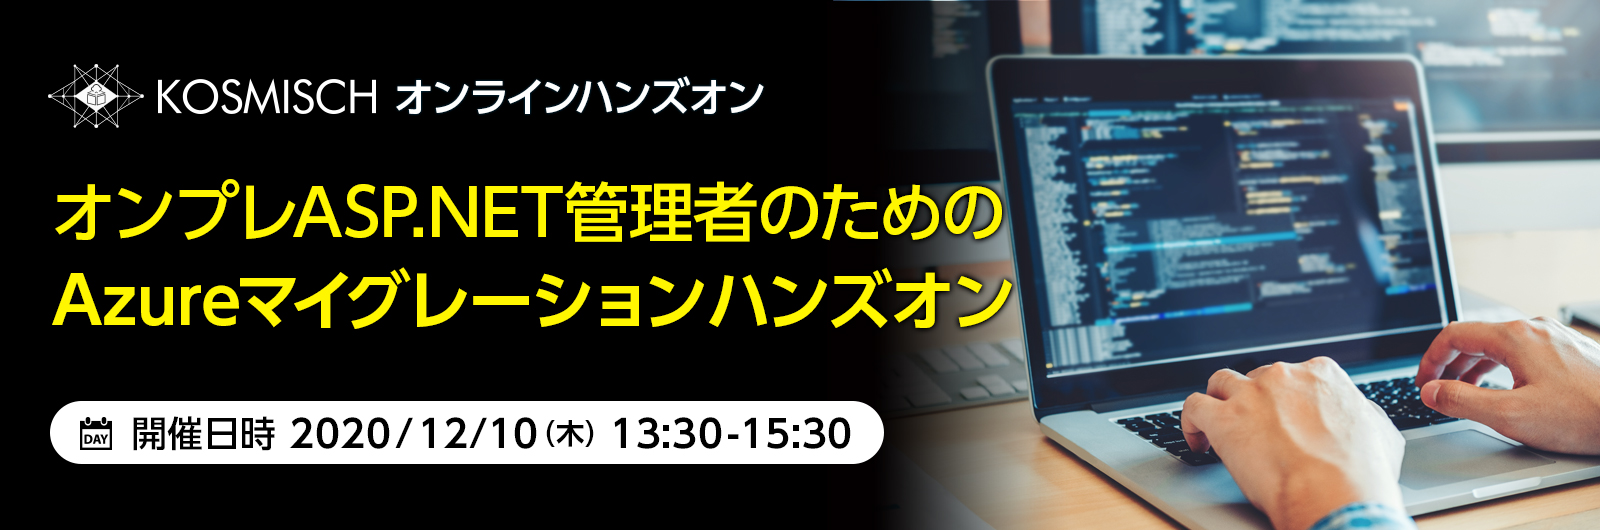 「KOSMISCH全国キャラバン」でオンプレASP.NET管理者のためのAzureマイグレーションハンズオンを日本マイクロソフトと共催でオンライン開催